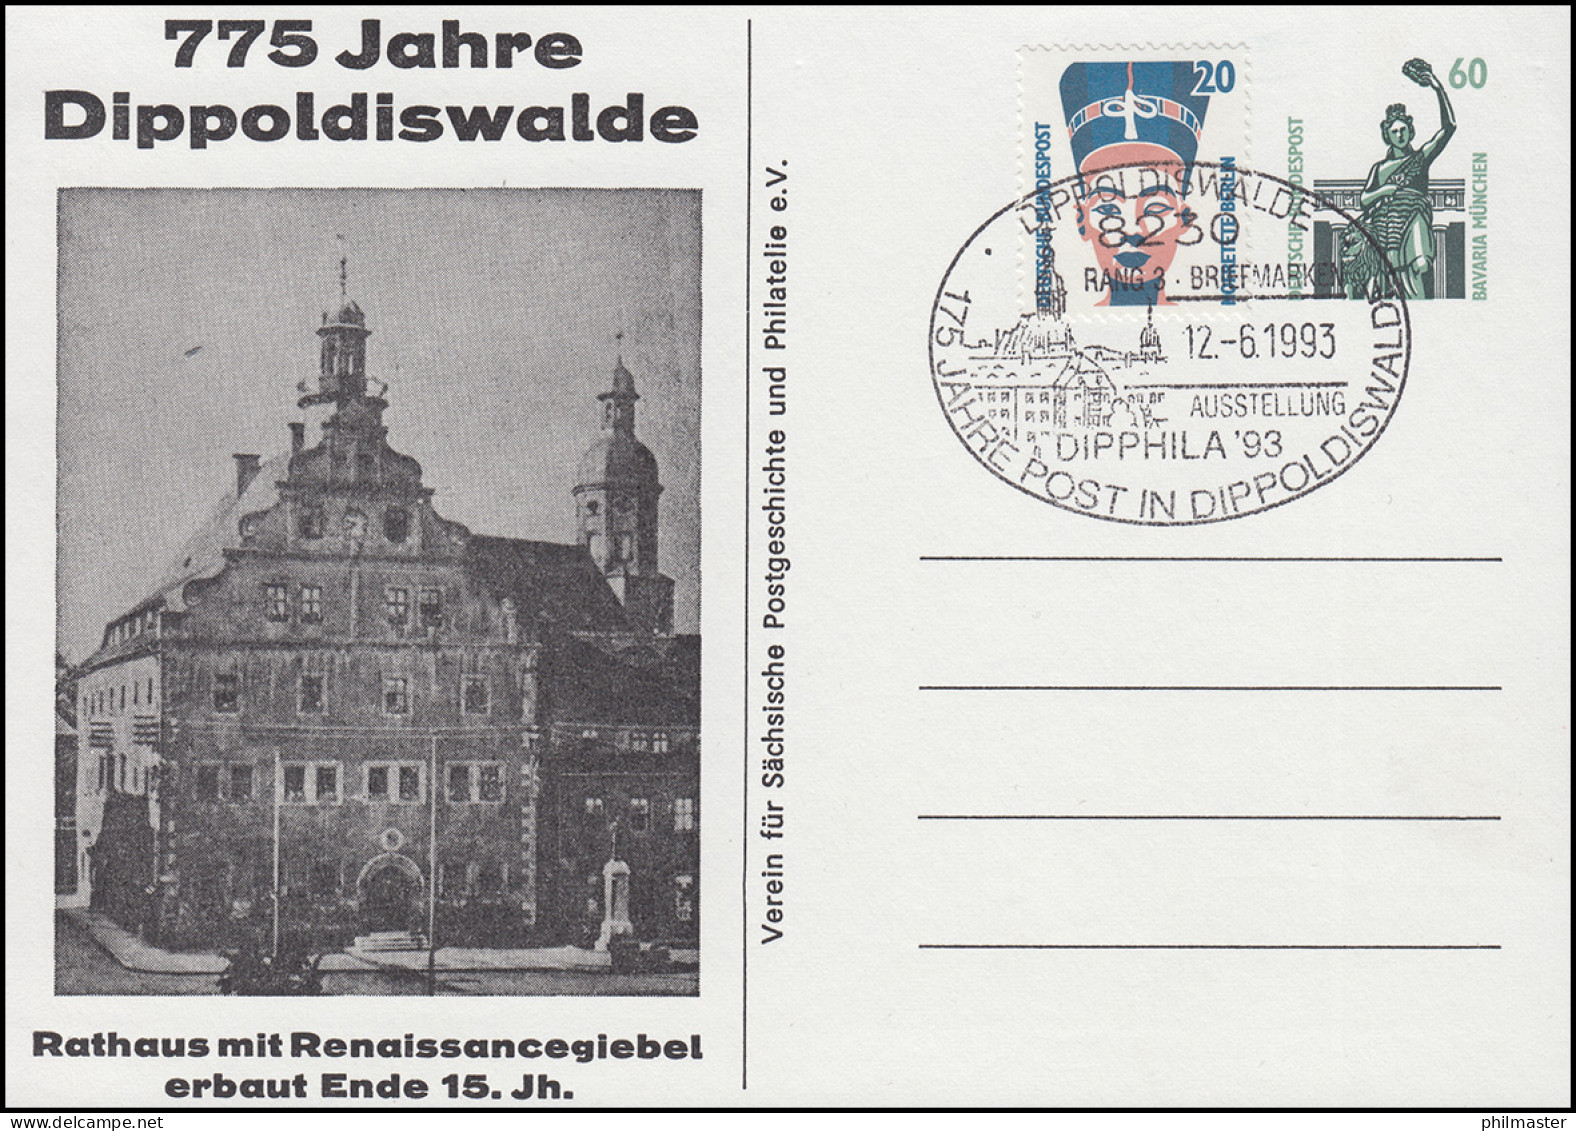 Privatpostkarte PP 151 775 Jahre Dippoldiswalde SSt DIPPOLDISWALDE 12.6.93 - Private Covers - Mint